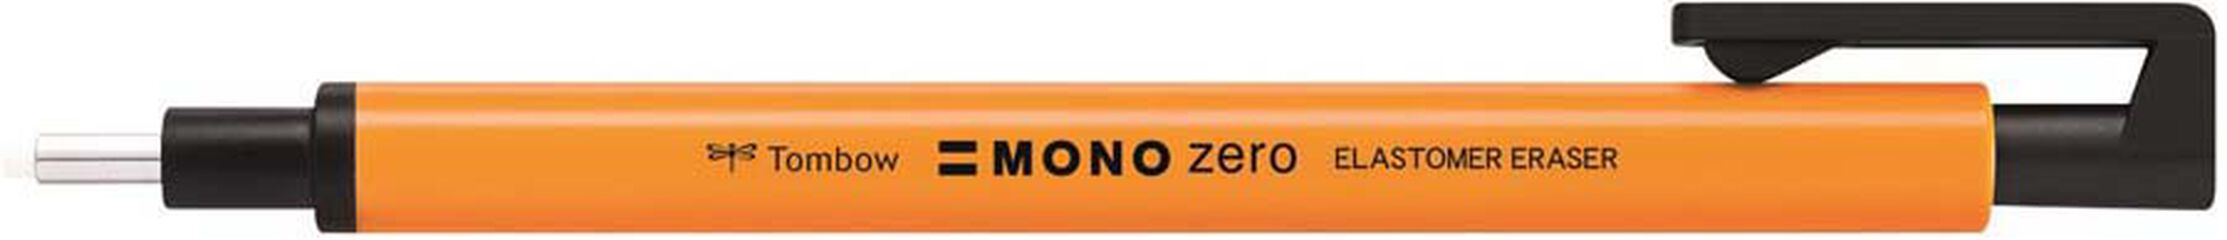 Portagomes Tombow Mono Zero taronja neó